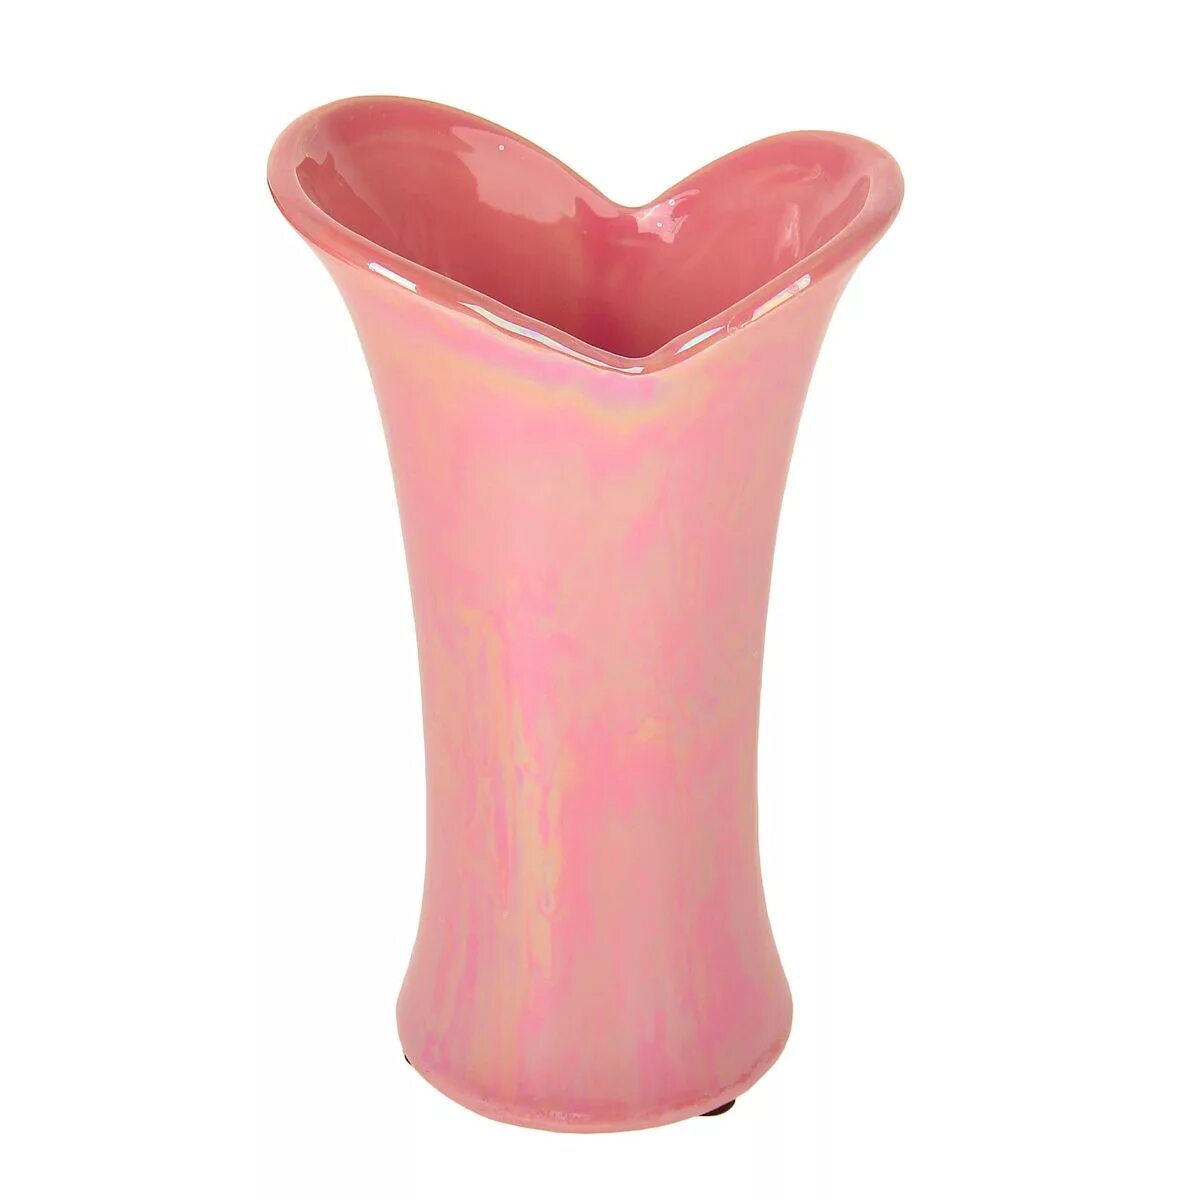 Ваза розового цвета. Розовая ваза. Керамическая ваза розовая. Вазы розового цвета. Ваза для цветов розовая.